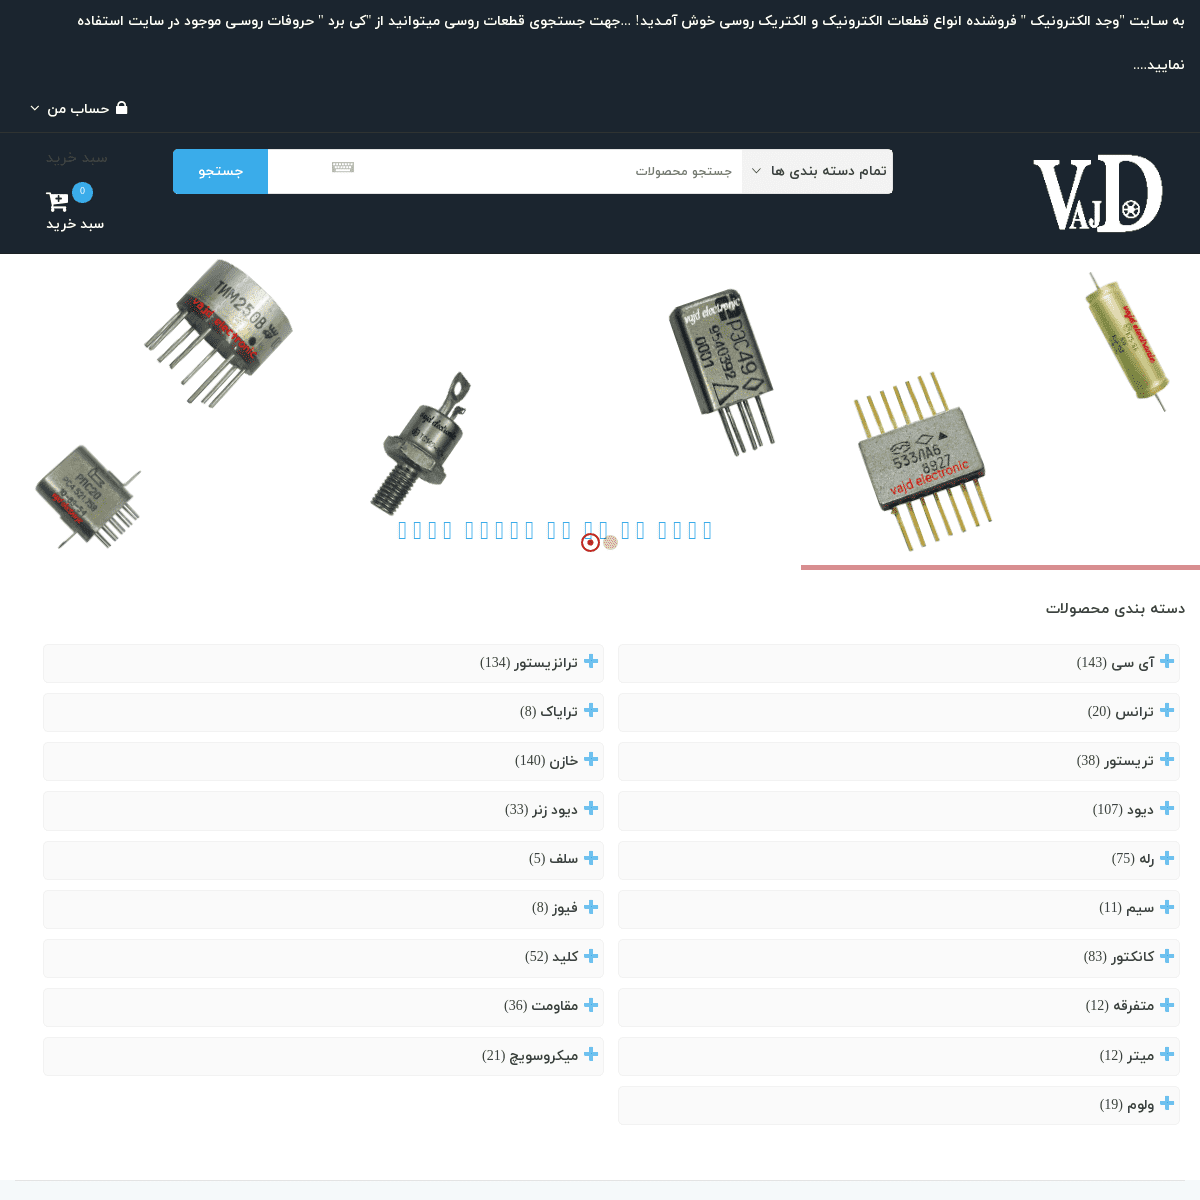 A complete backup of vajdelectronic.com